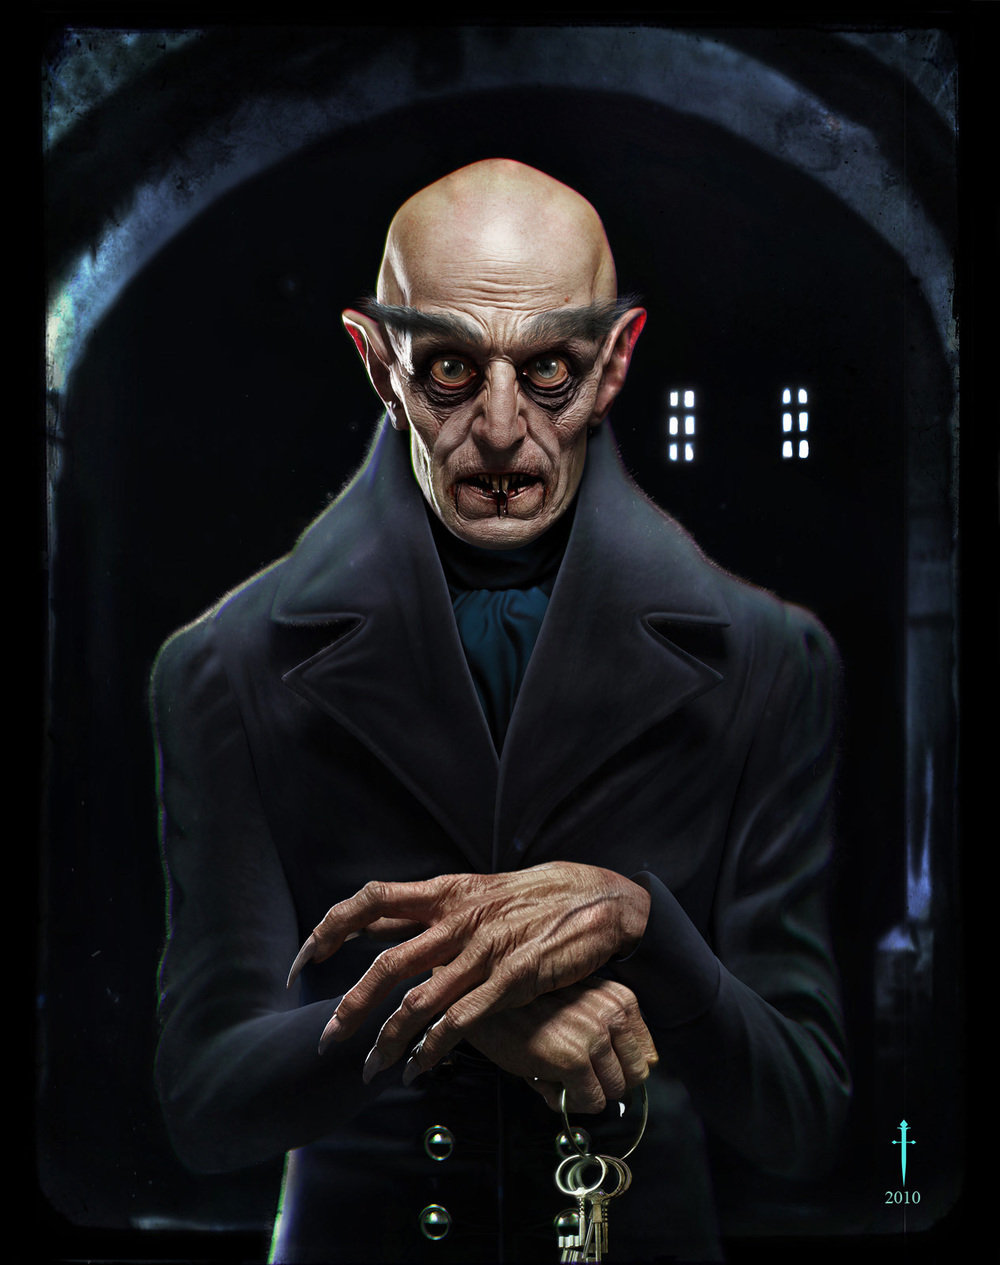 Count Orlok portrait by Daniel Crossland, 2010